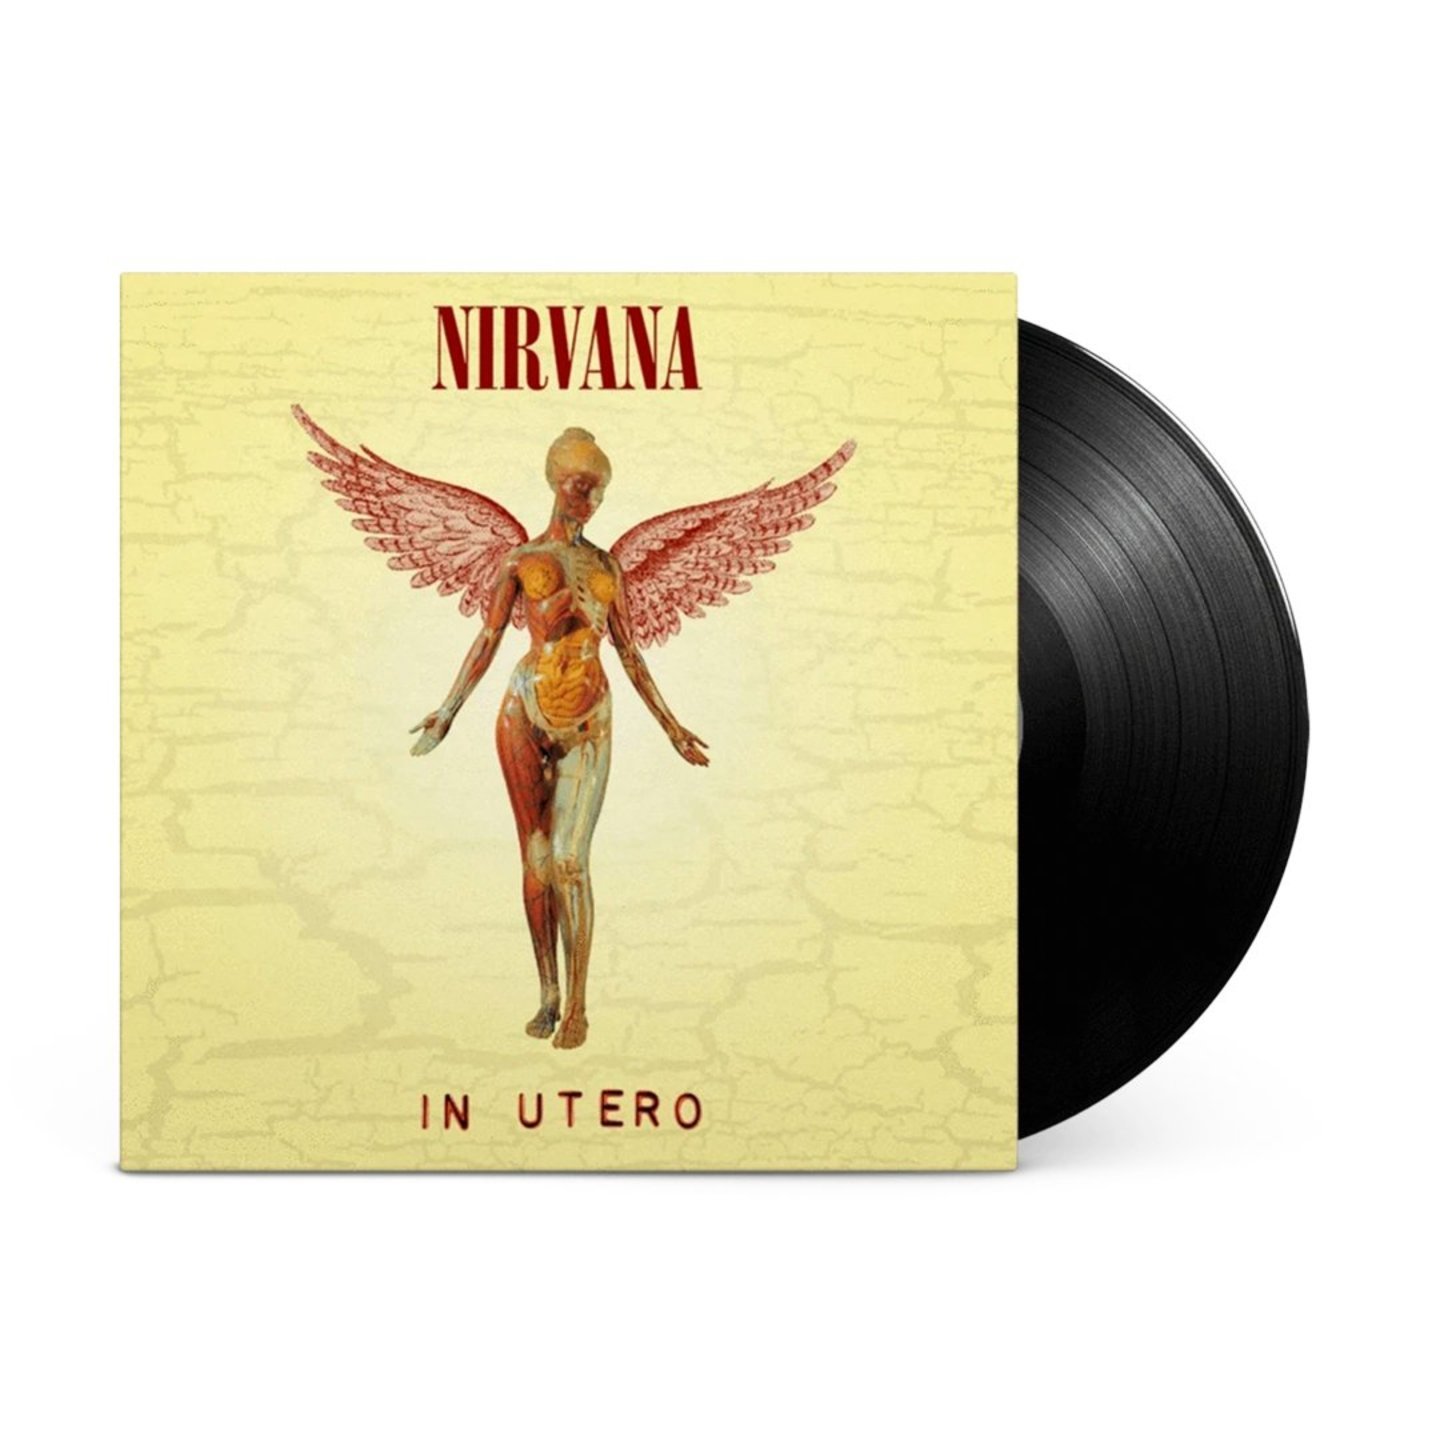 NIRVANA - In Utero LP 180 gram vinyl